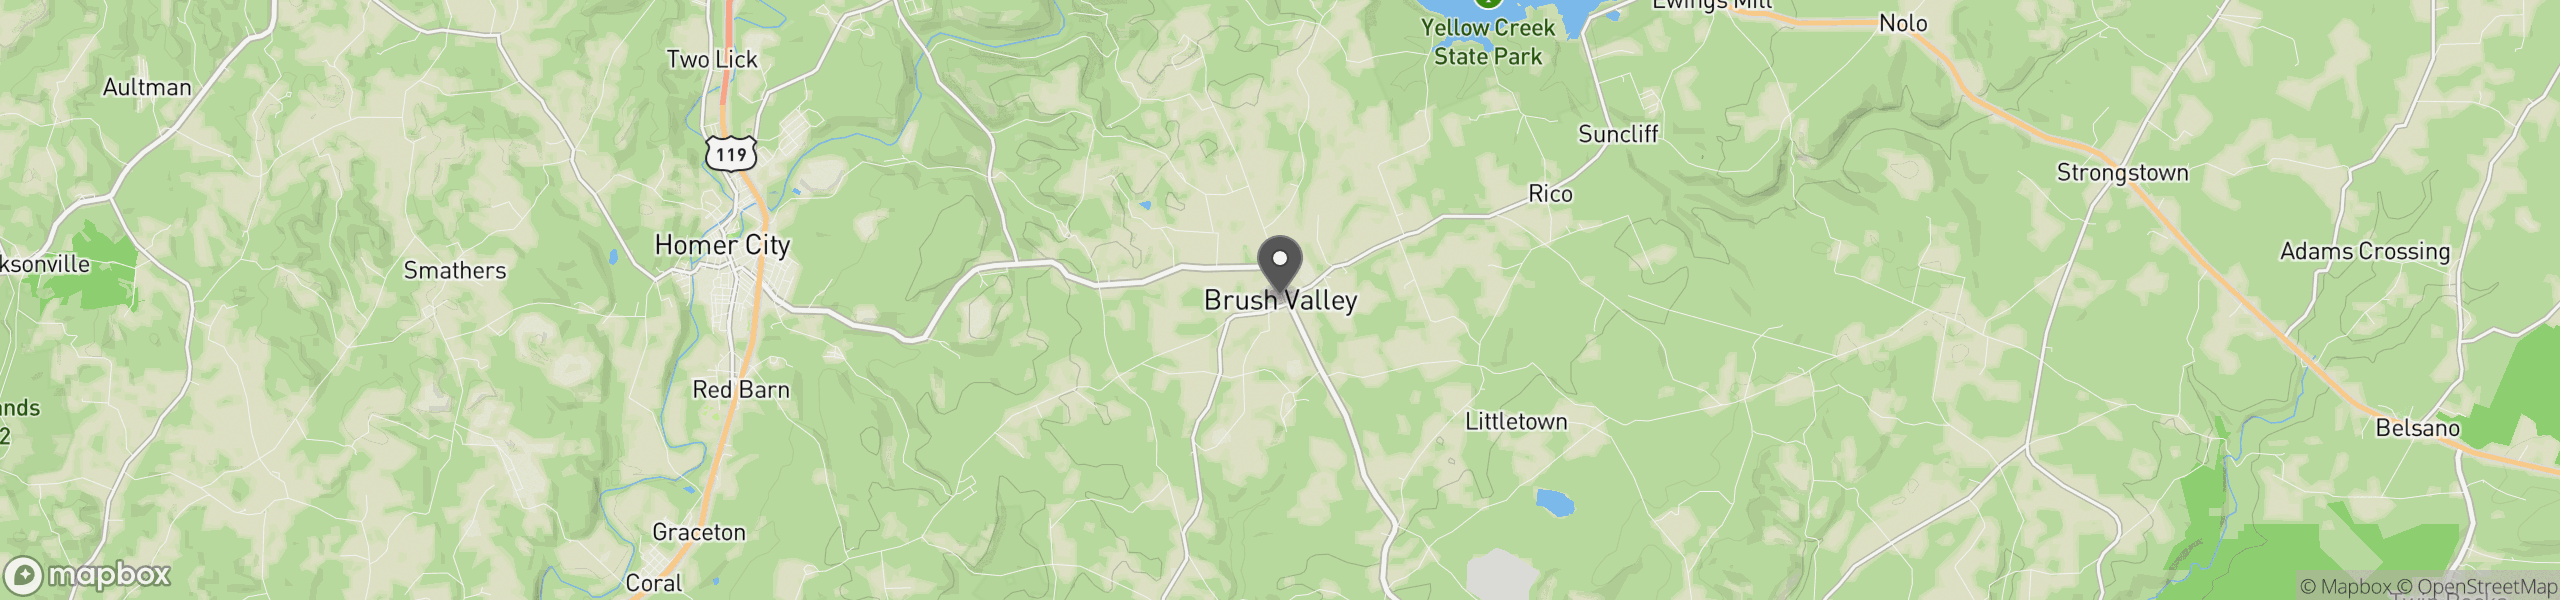 Brush Valley, PA